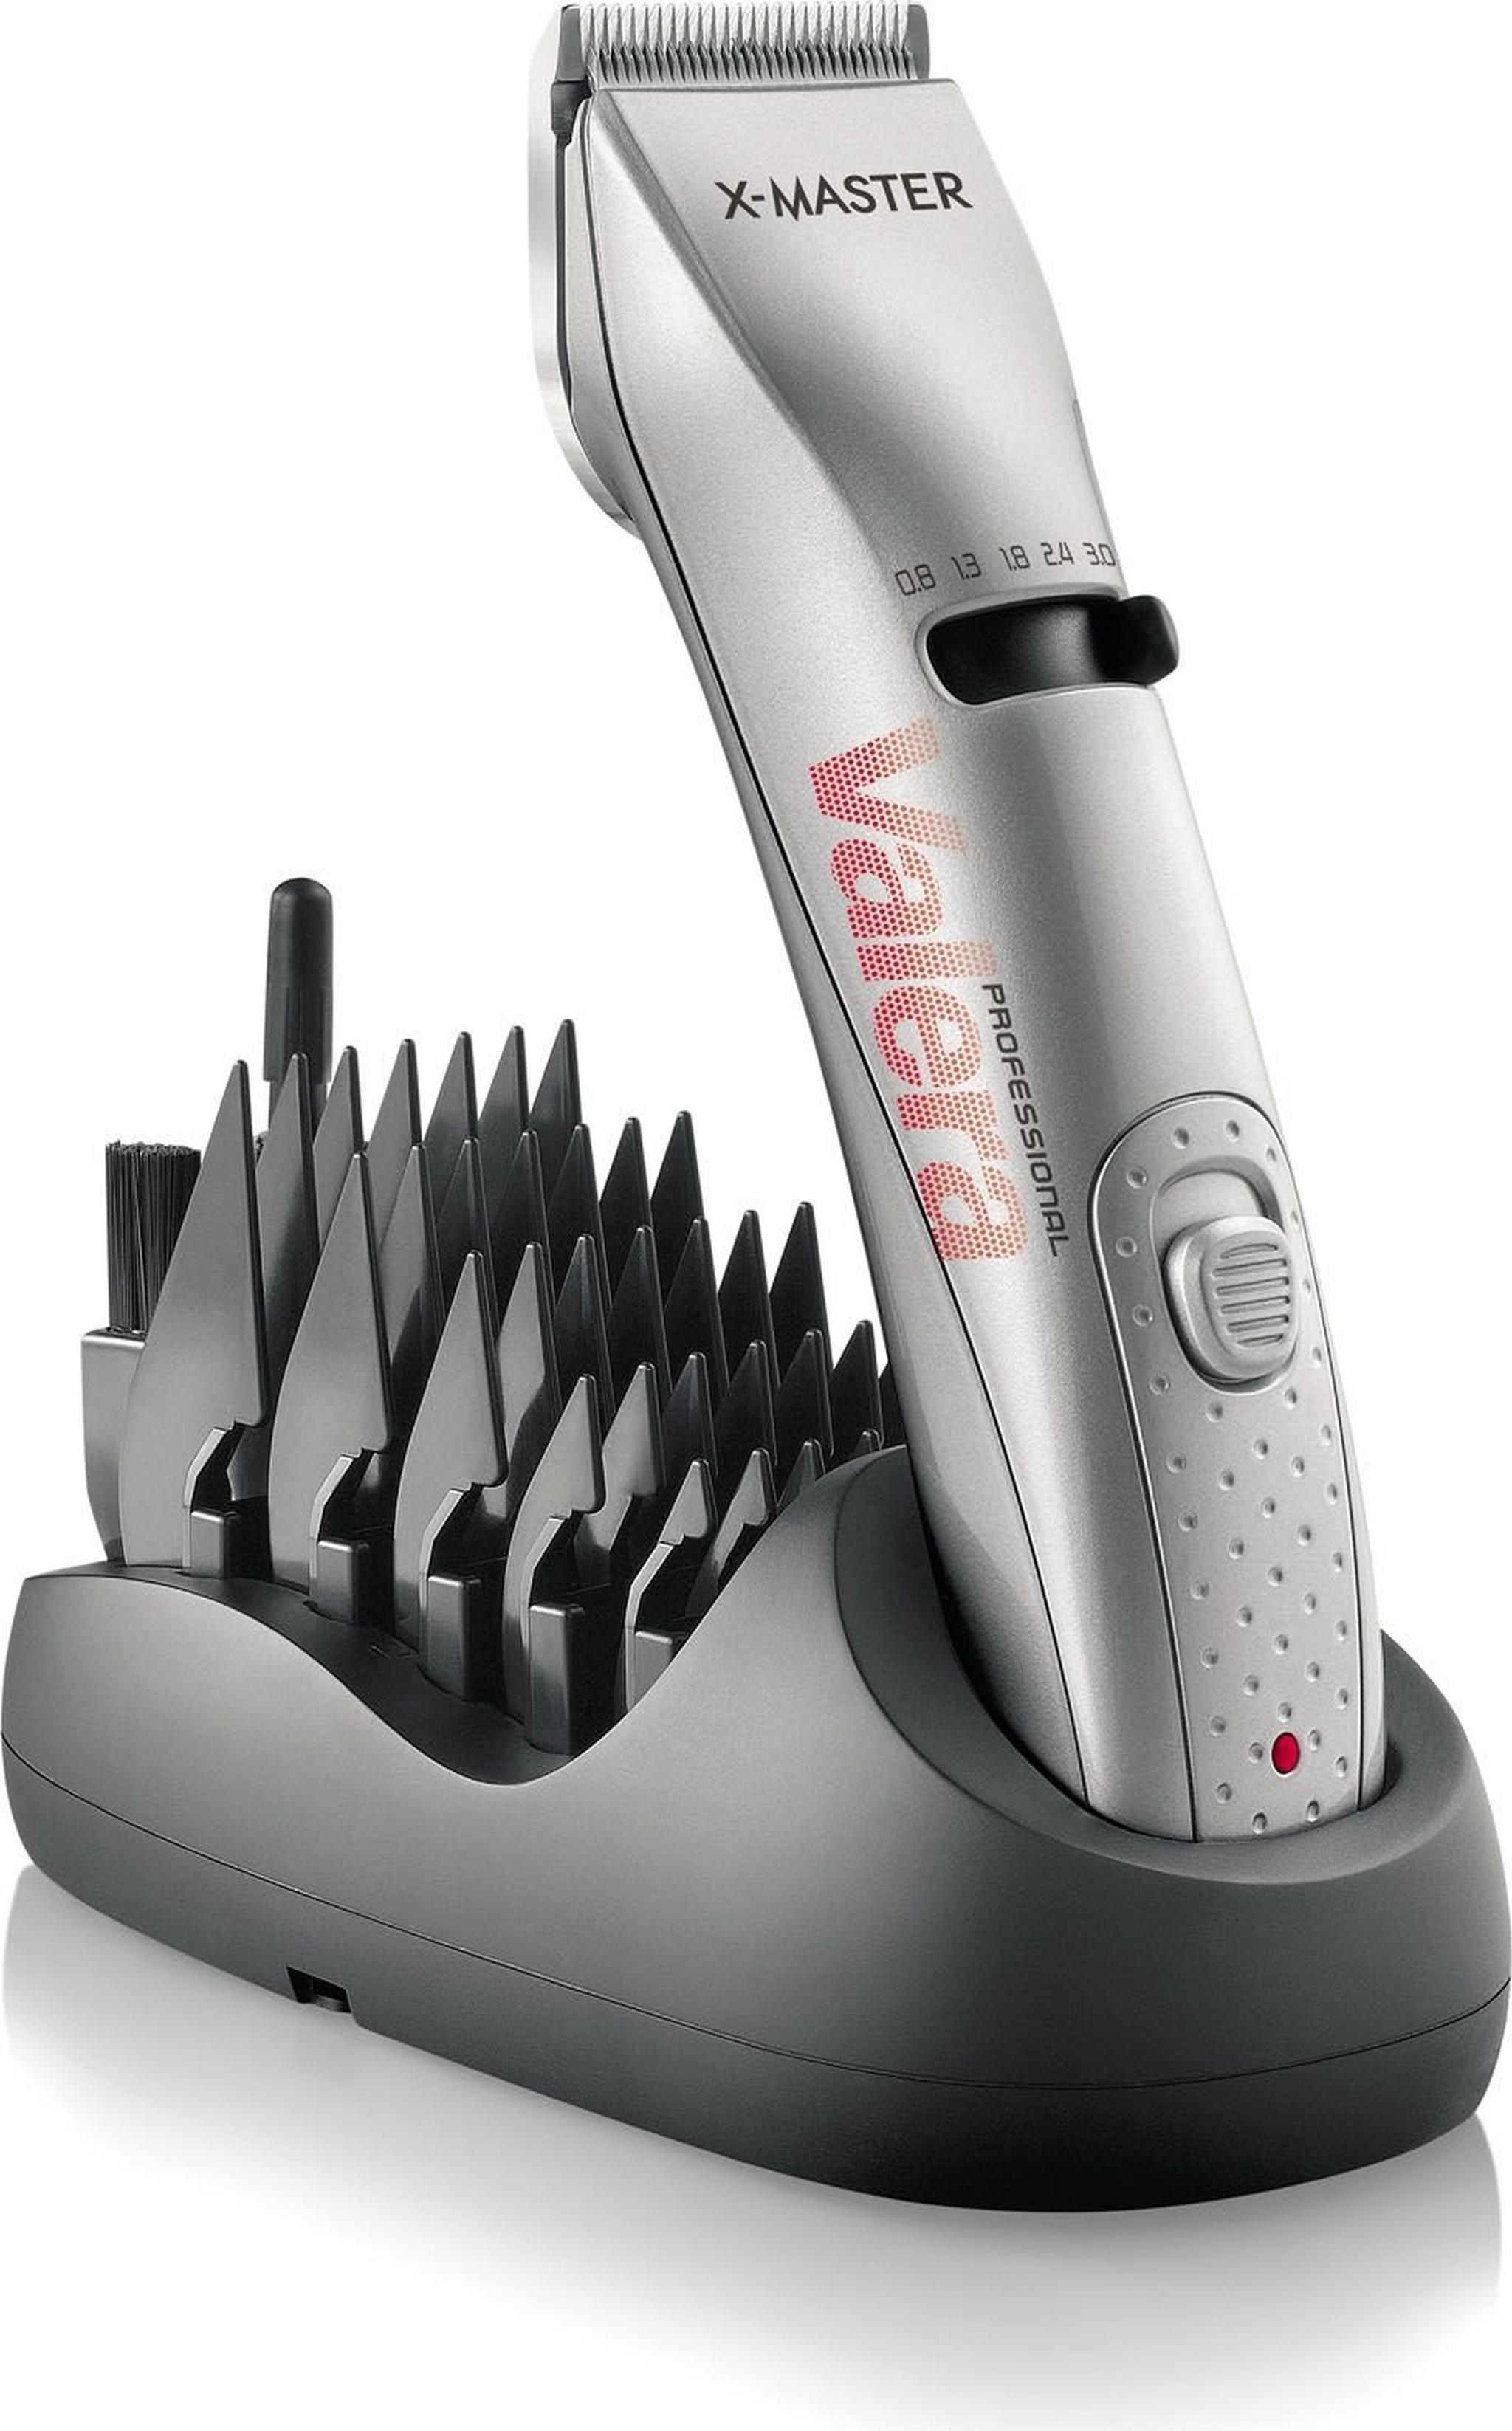 Valera X-Master 652.3 Pro Hair Clipper Set